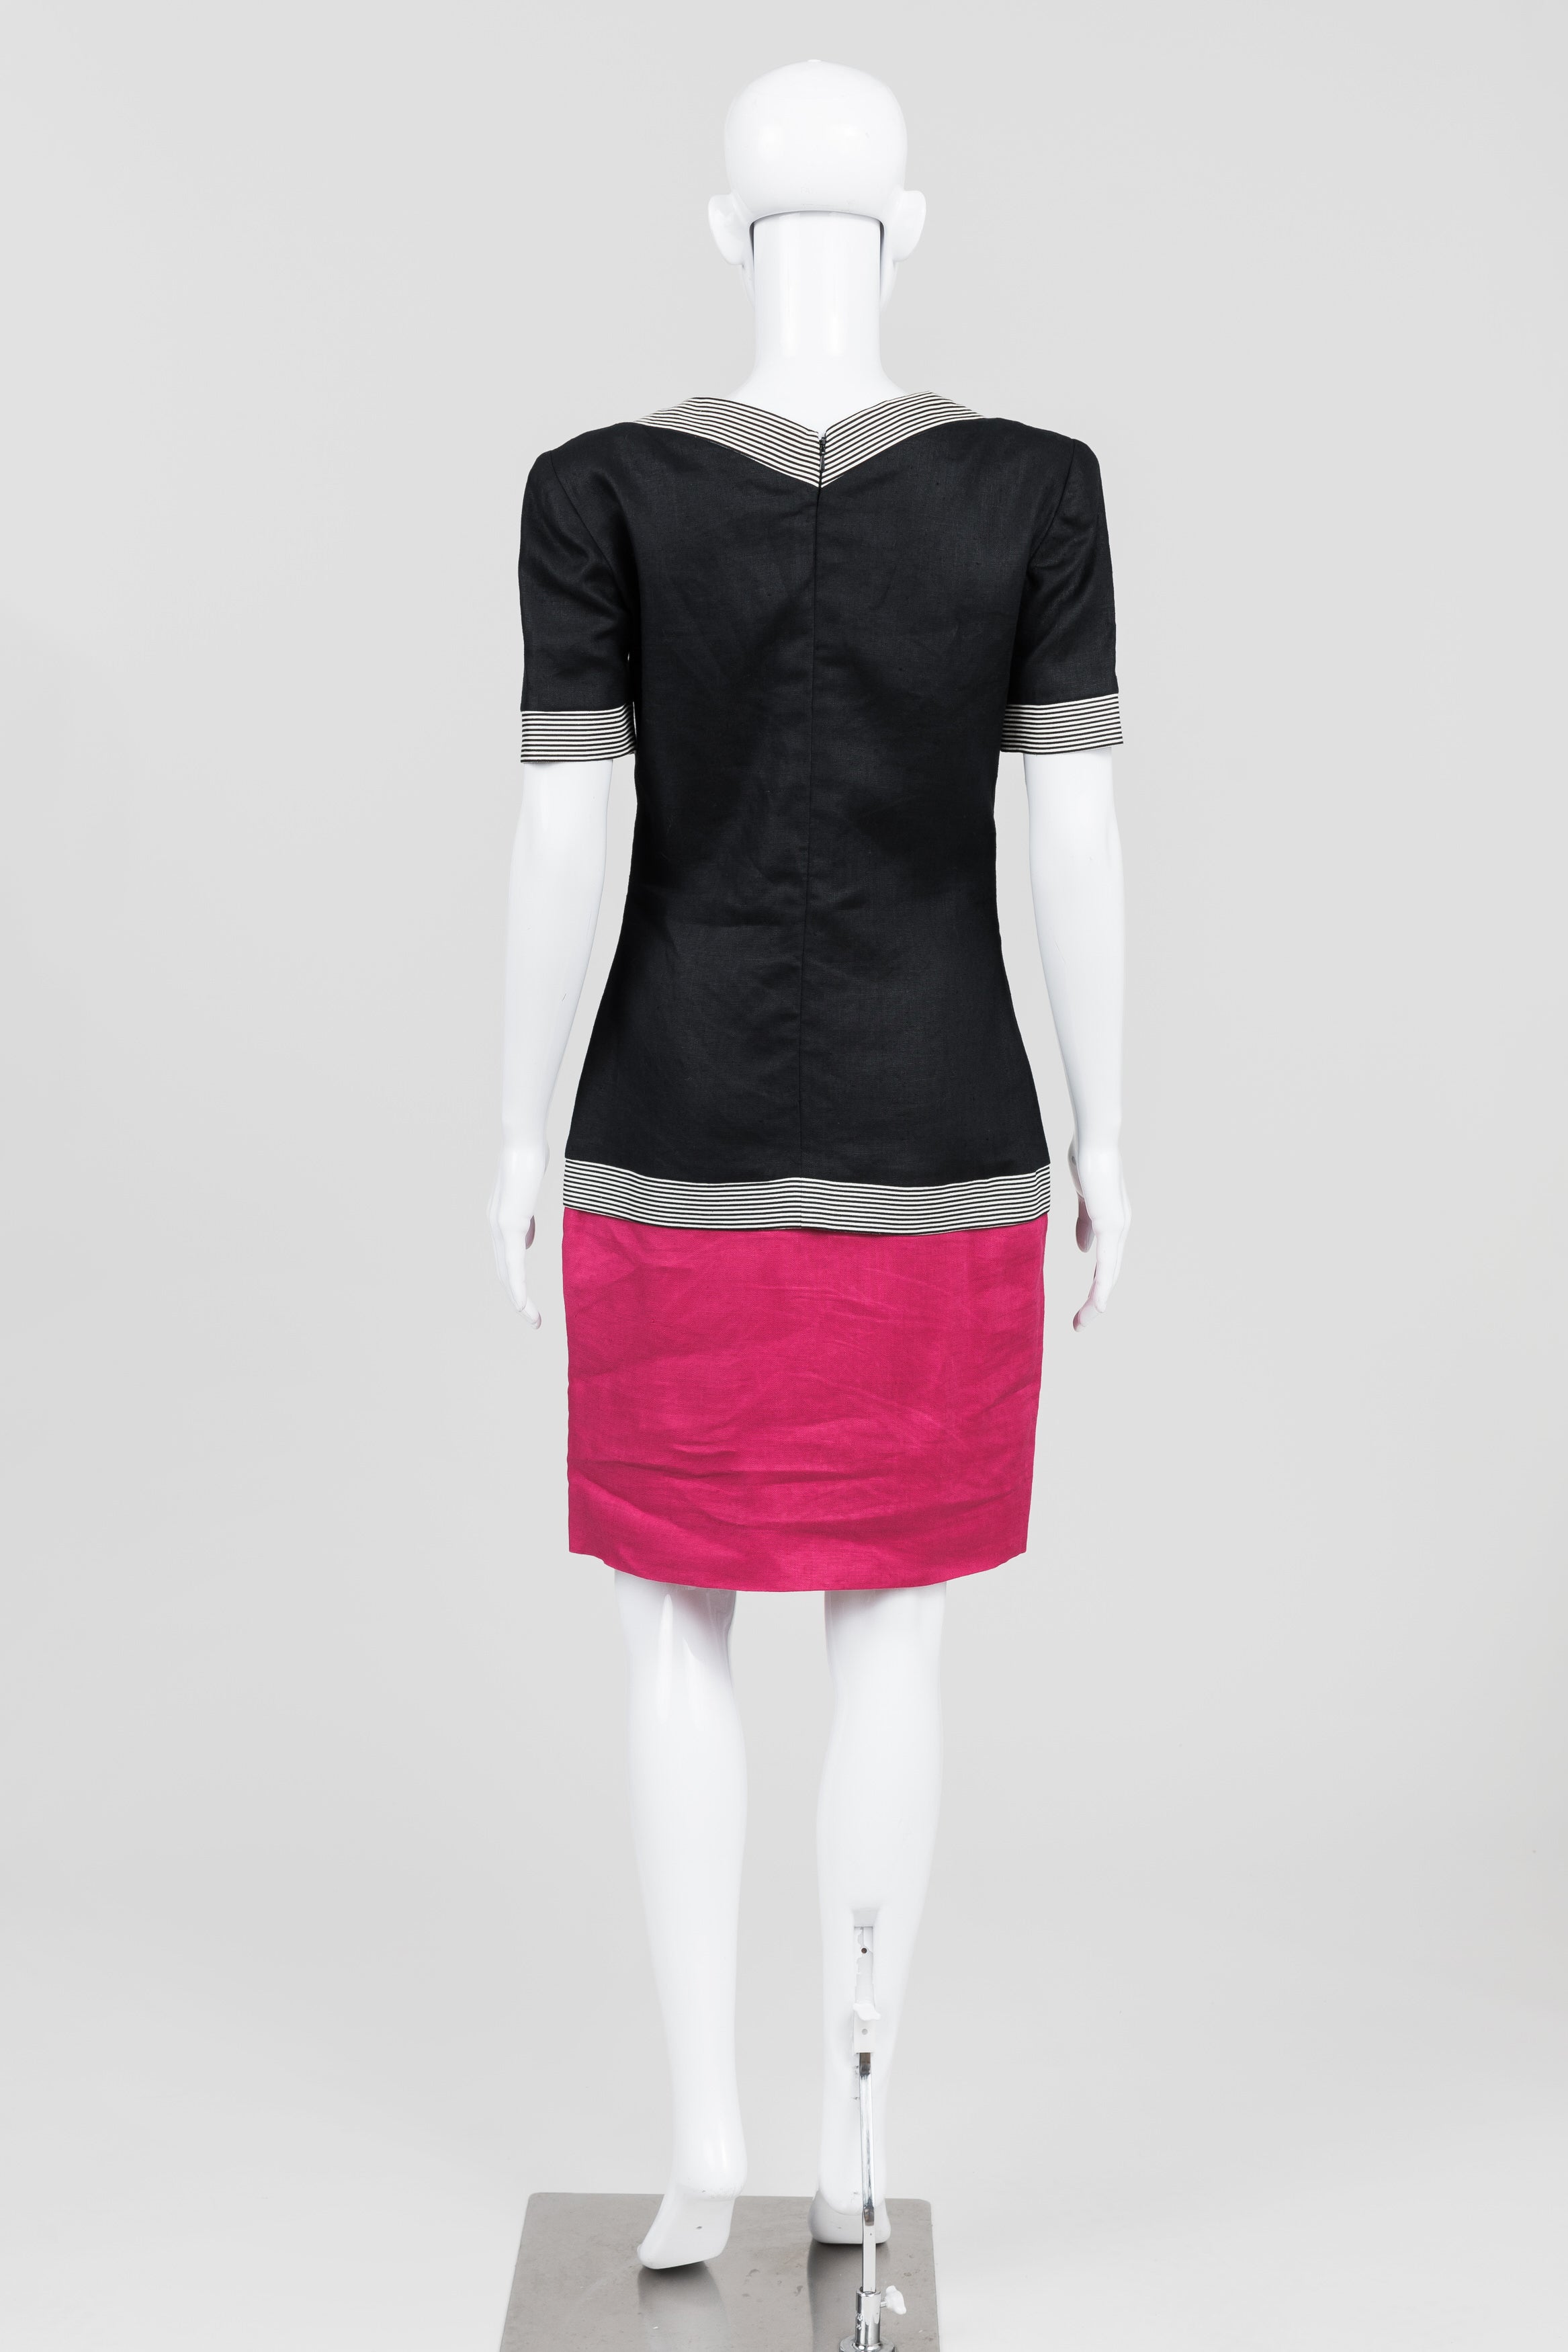 Oscar de la Renta Vintage Navy/Fushia Colourblock Dress (4)